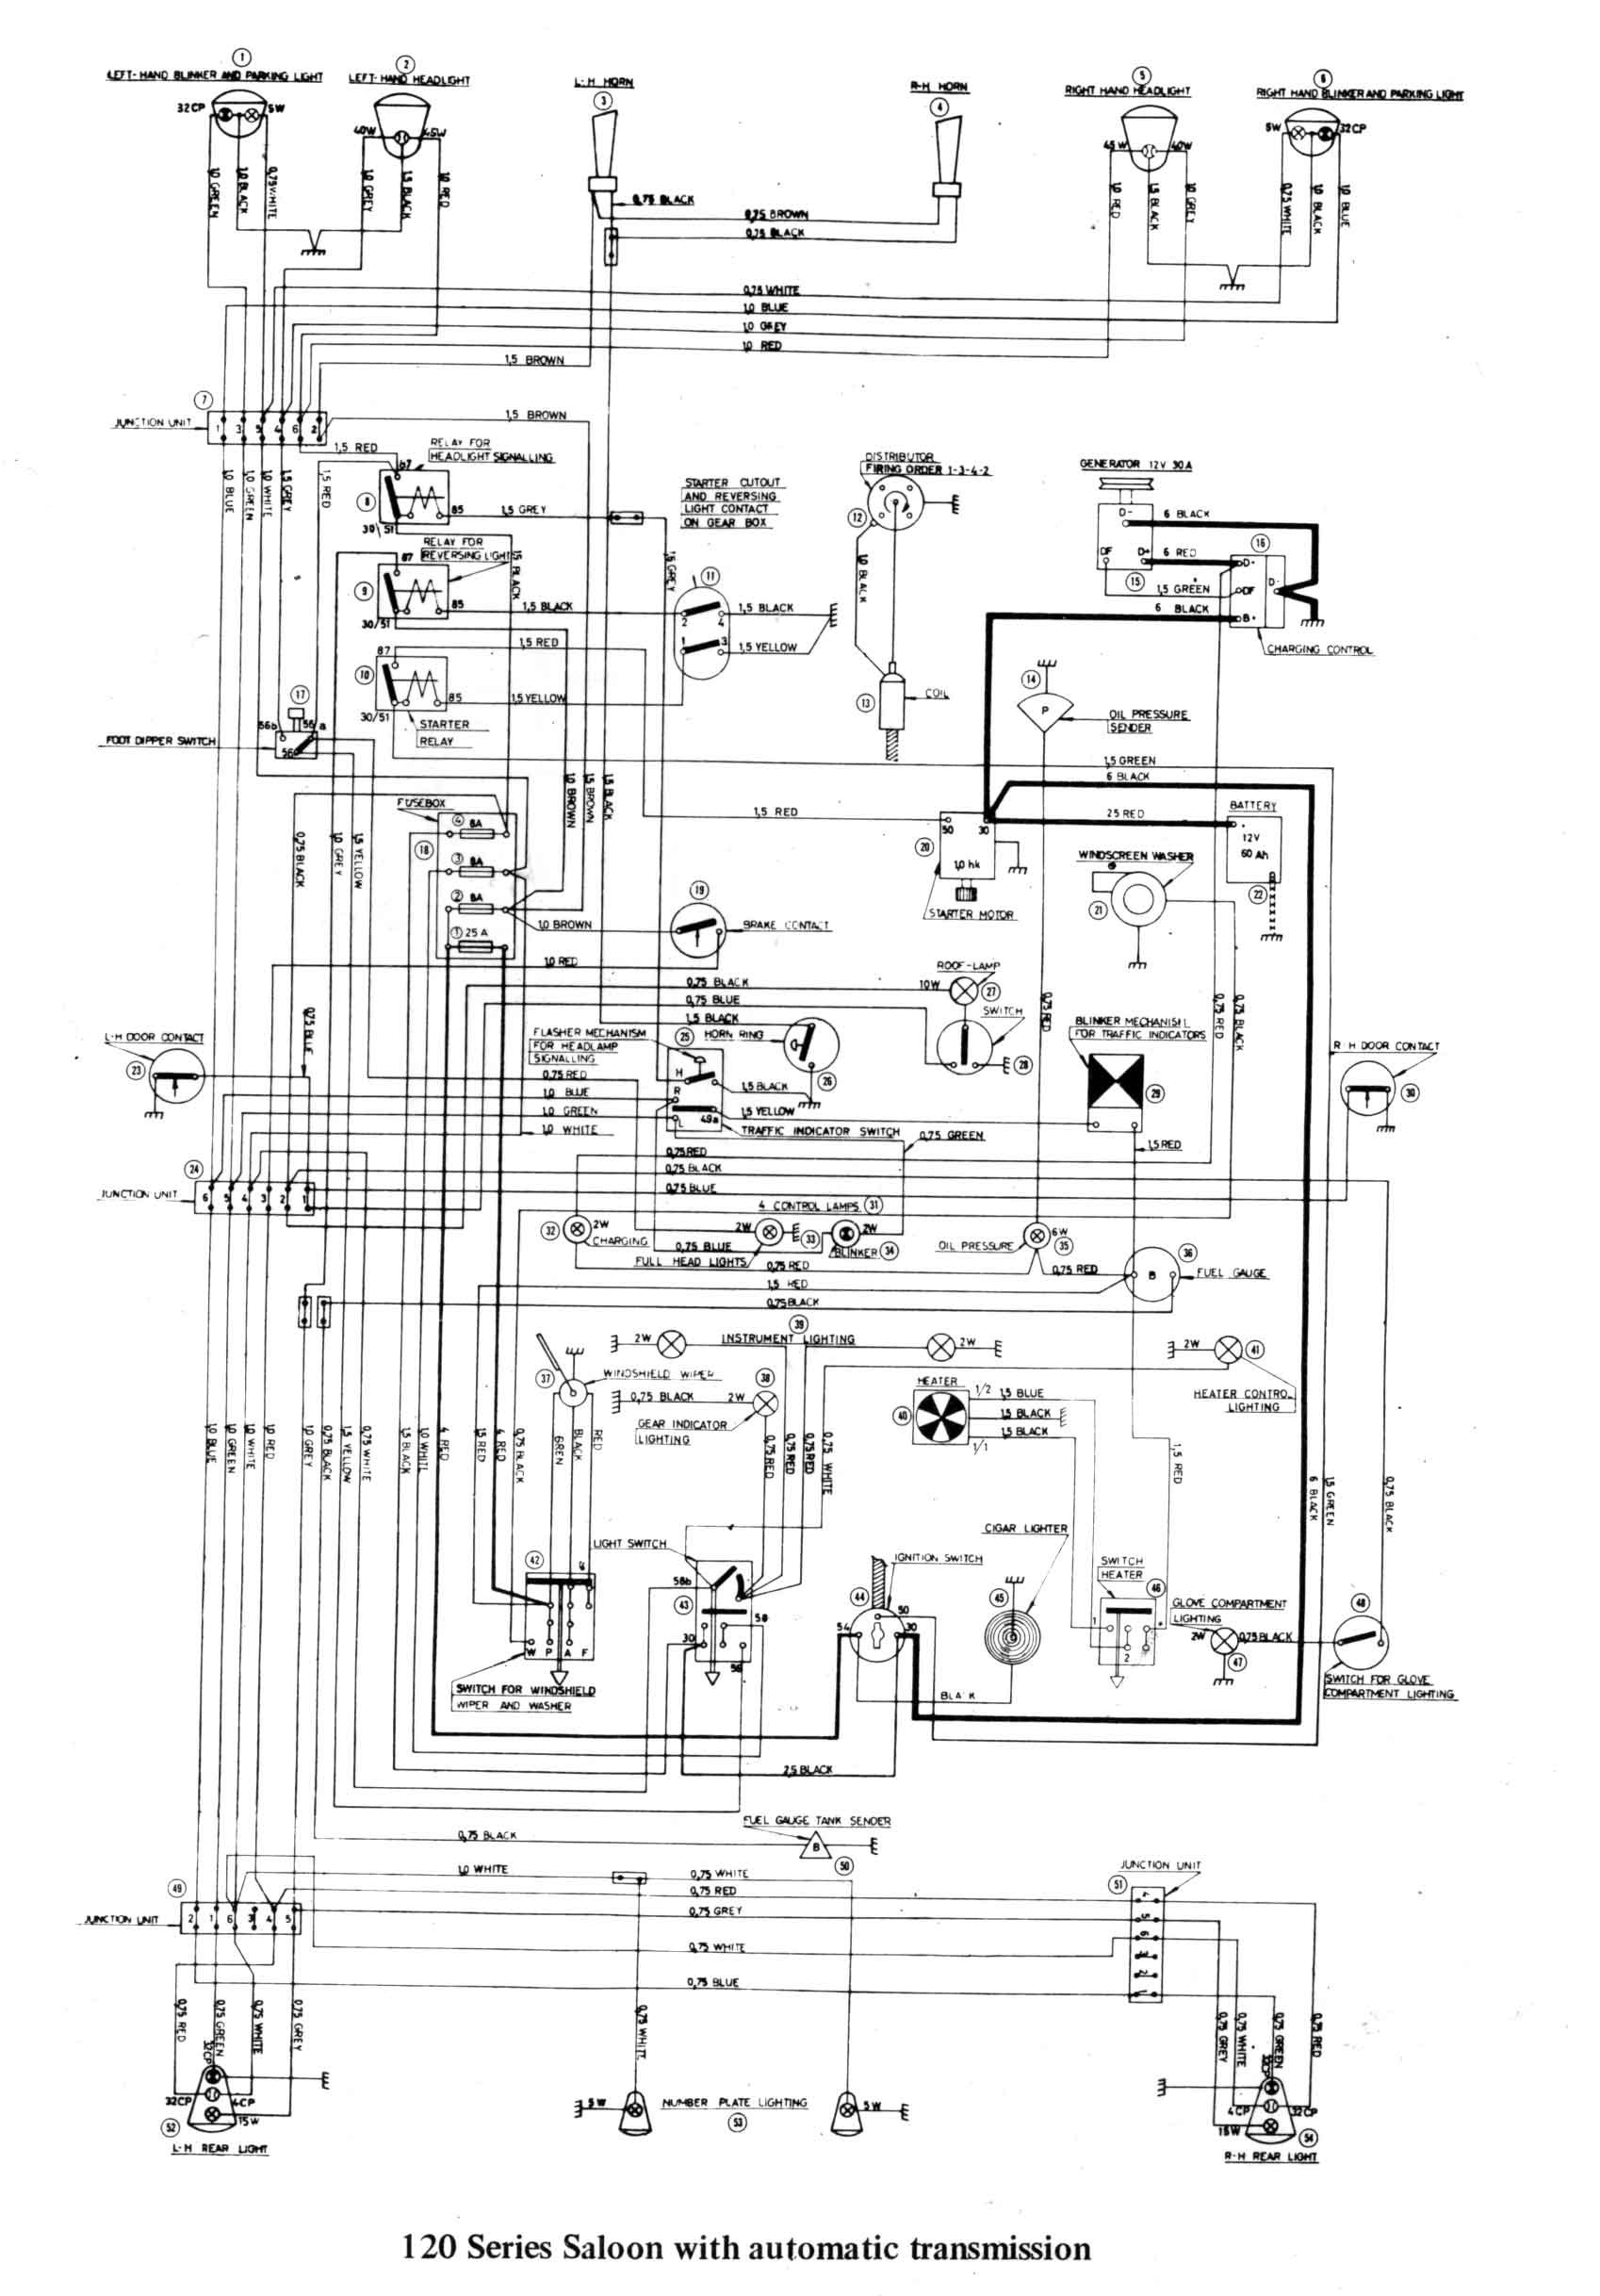 Volvo 940 Engine Diagram Volvo 740 Wiring Diagram Fitfathers Me Amazing Blurts Of Volvo 940 Engine Diagram